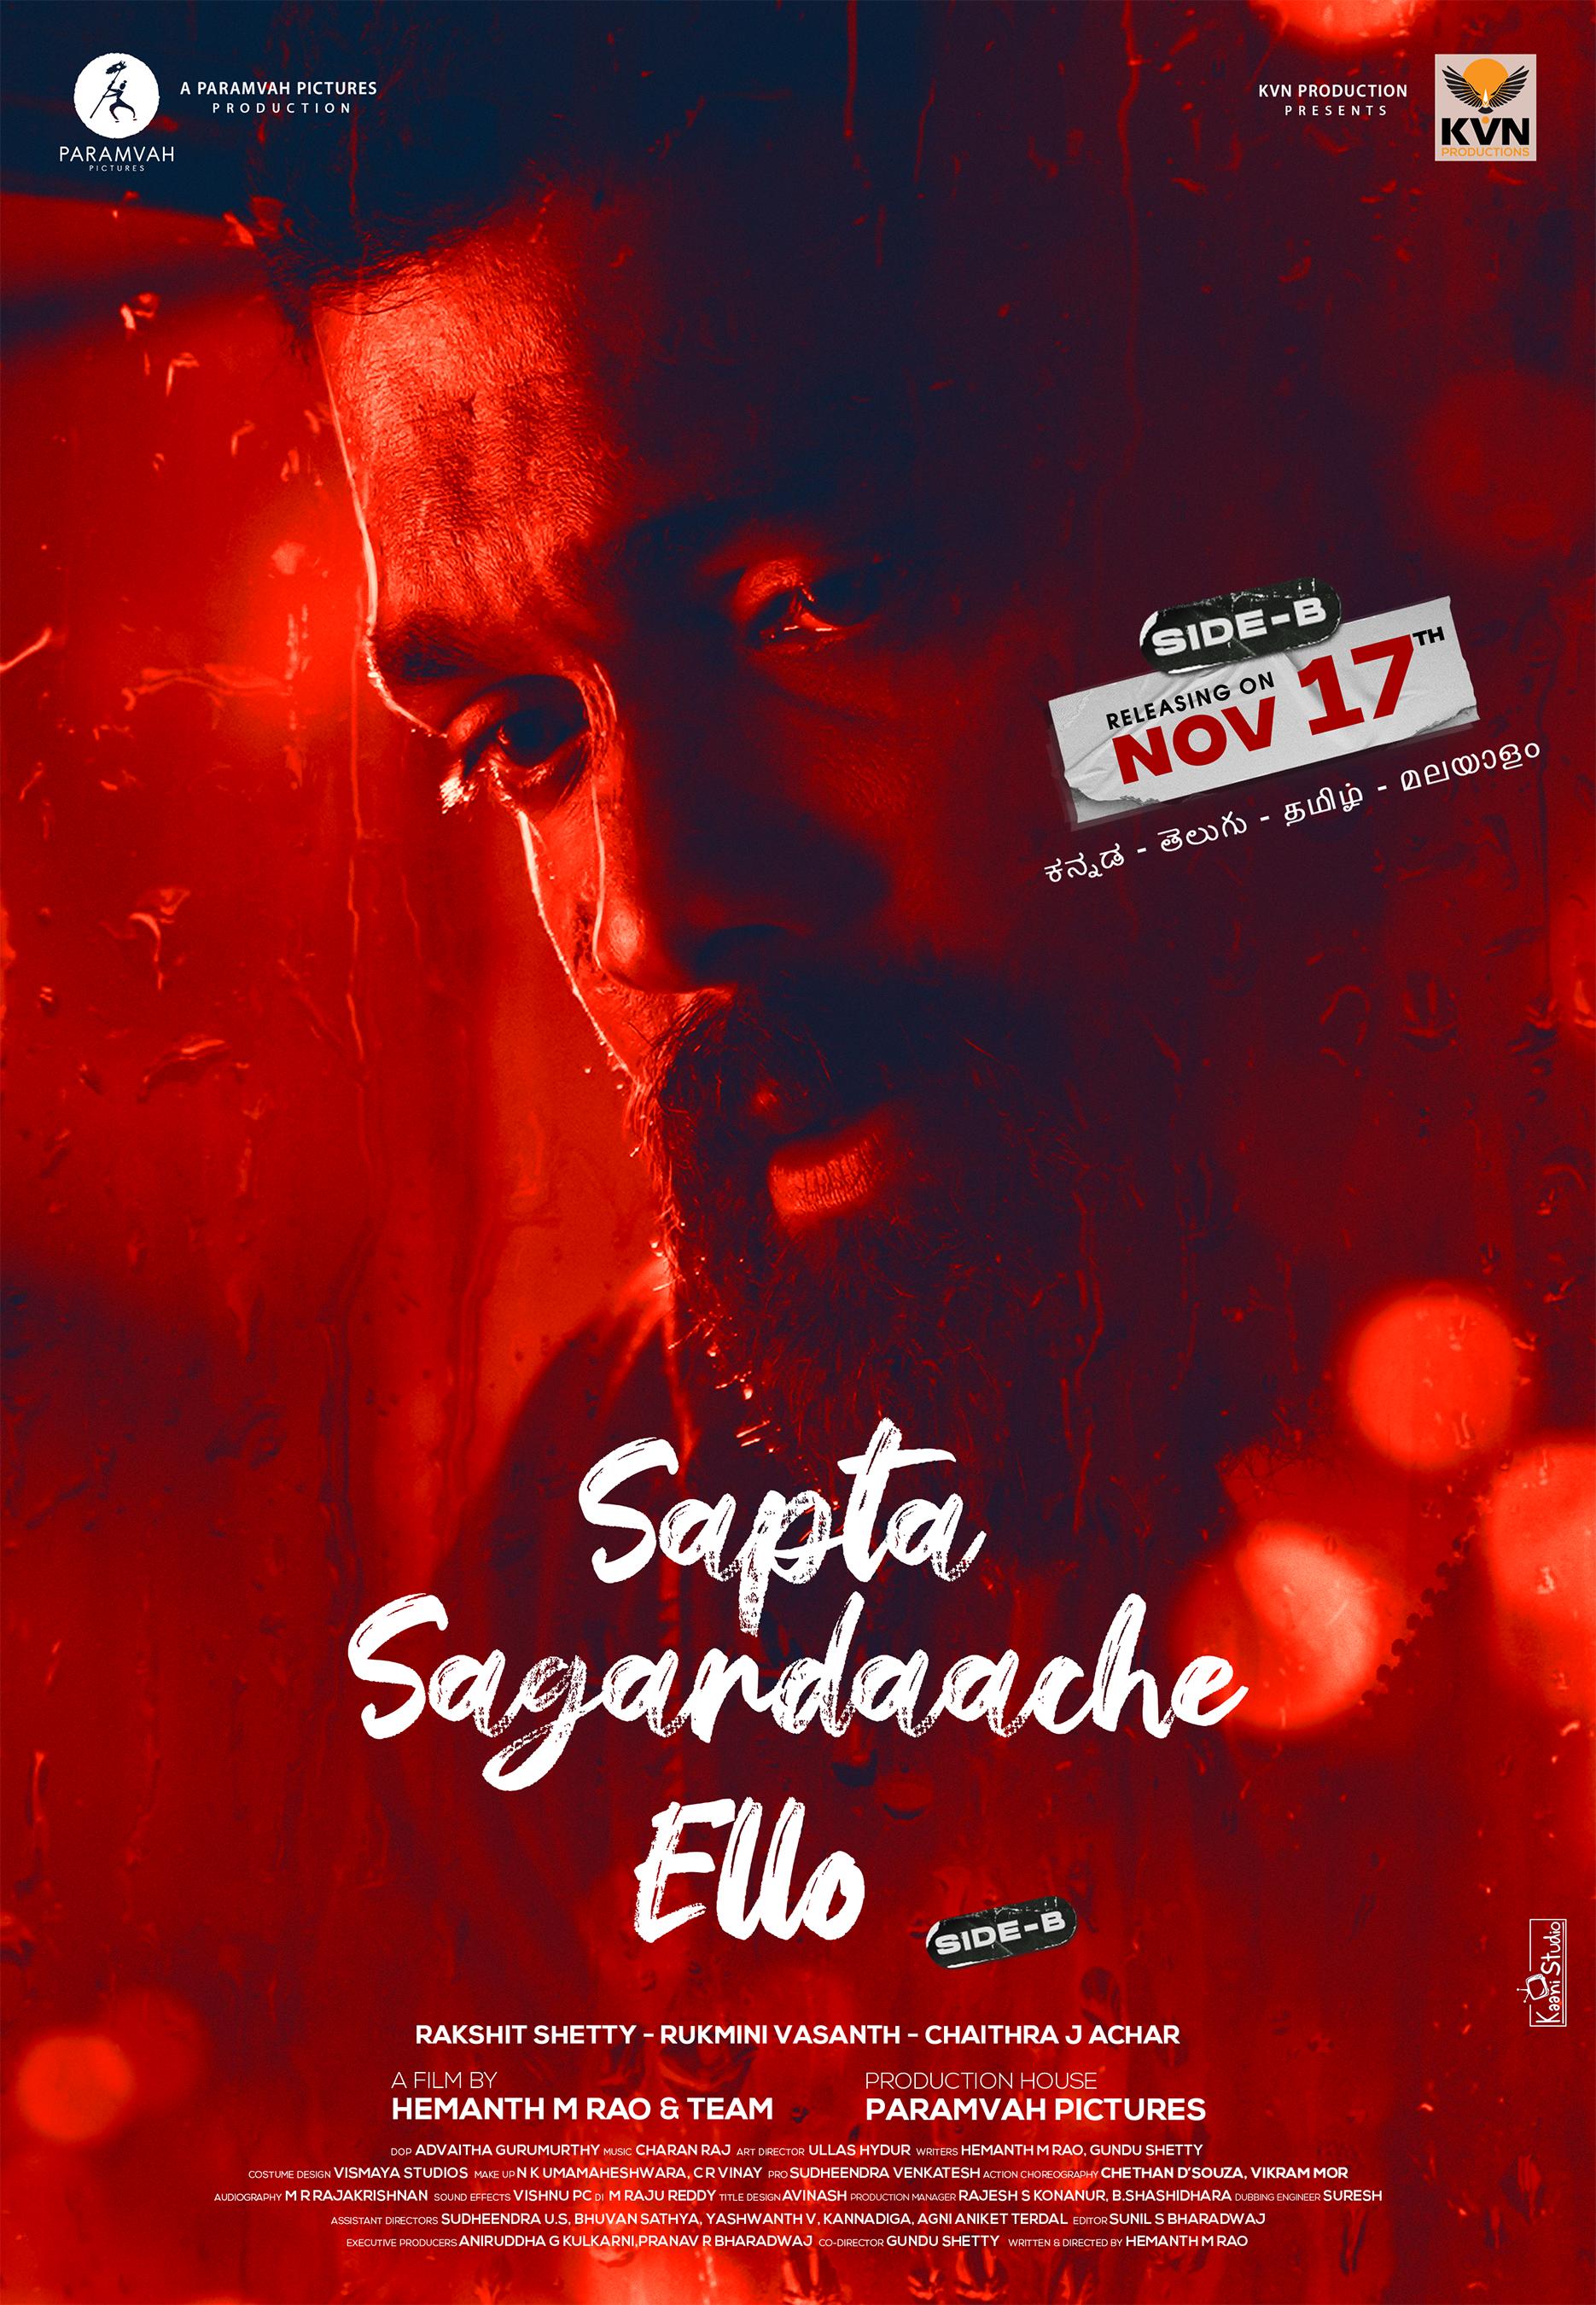 Sapta Sagaradaache Ello - Side B Movie Review